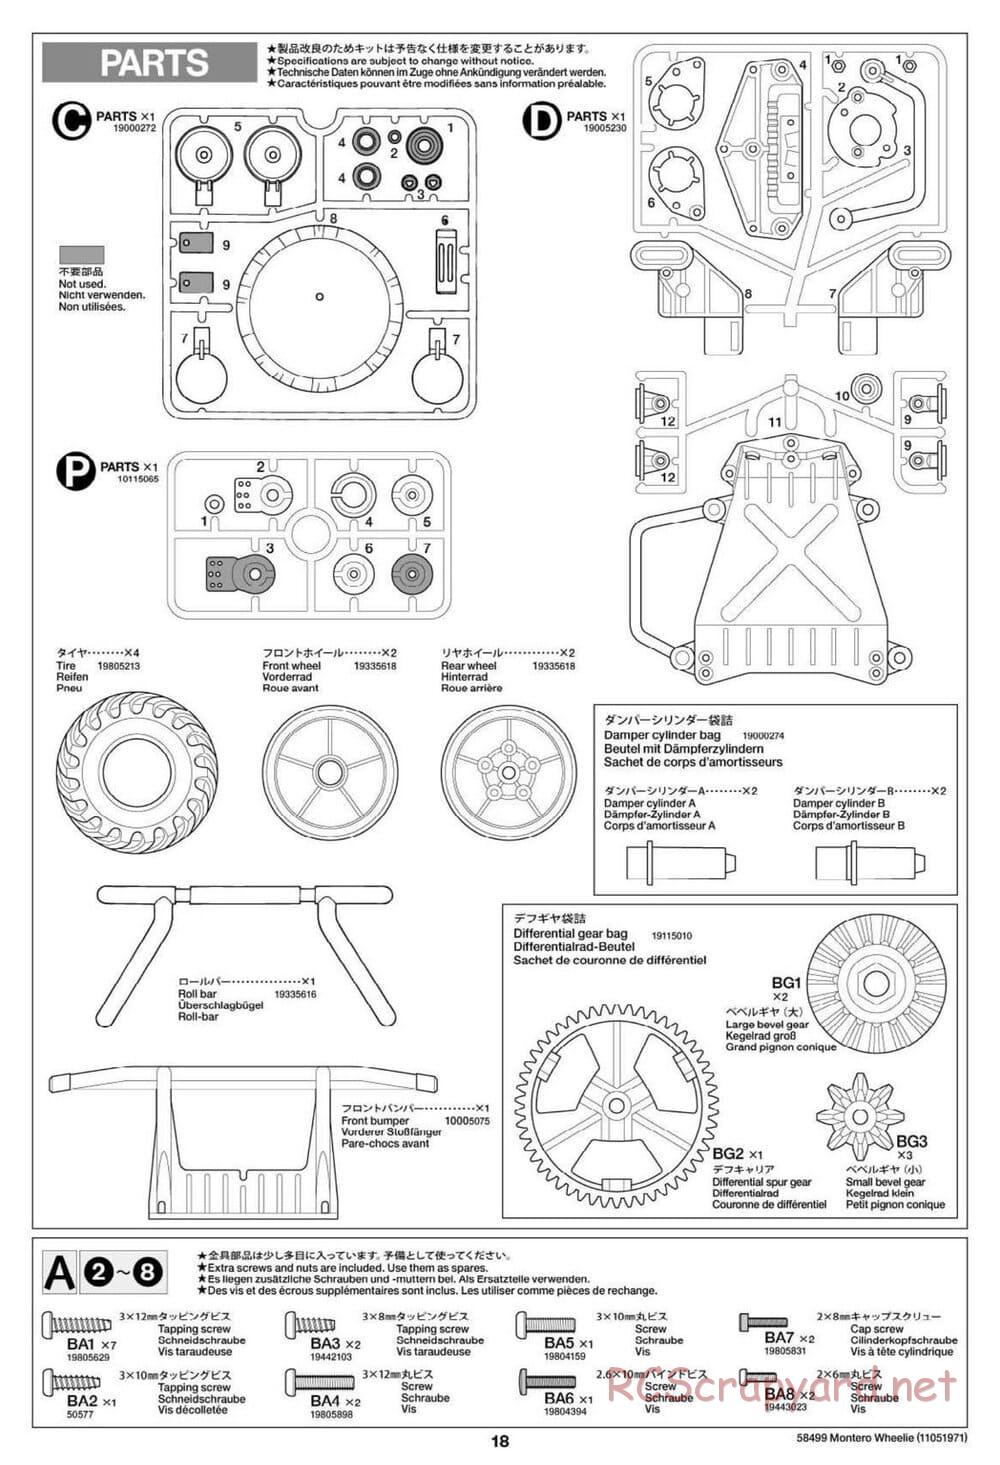 Tamiya - Mitsubishi Montero Wheelie - CW-01 Chassis - Manual - Page 18